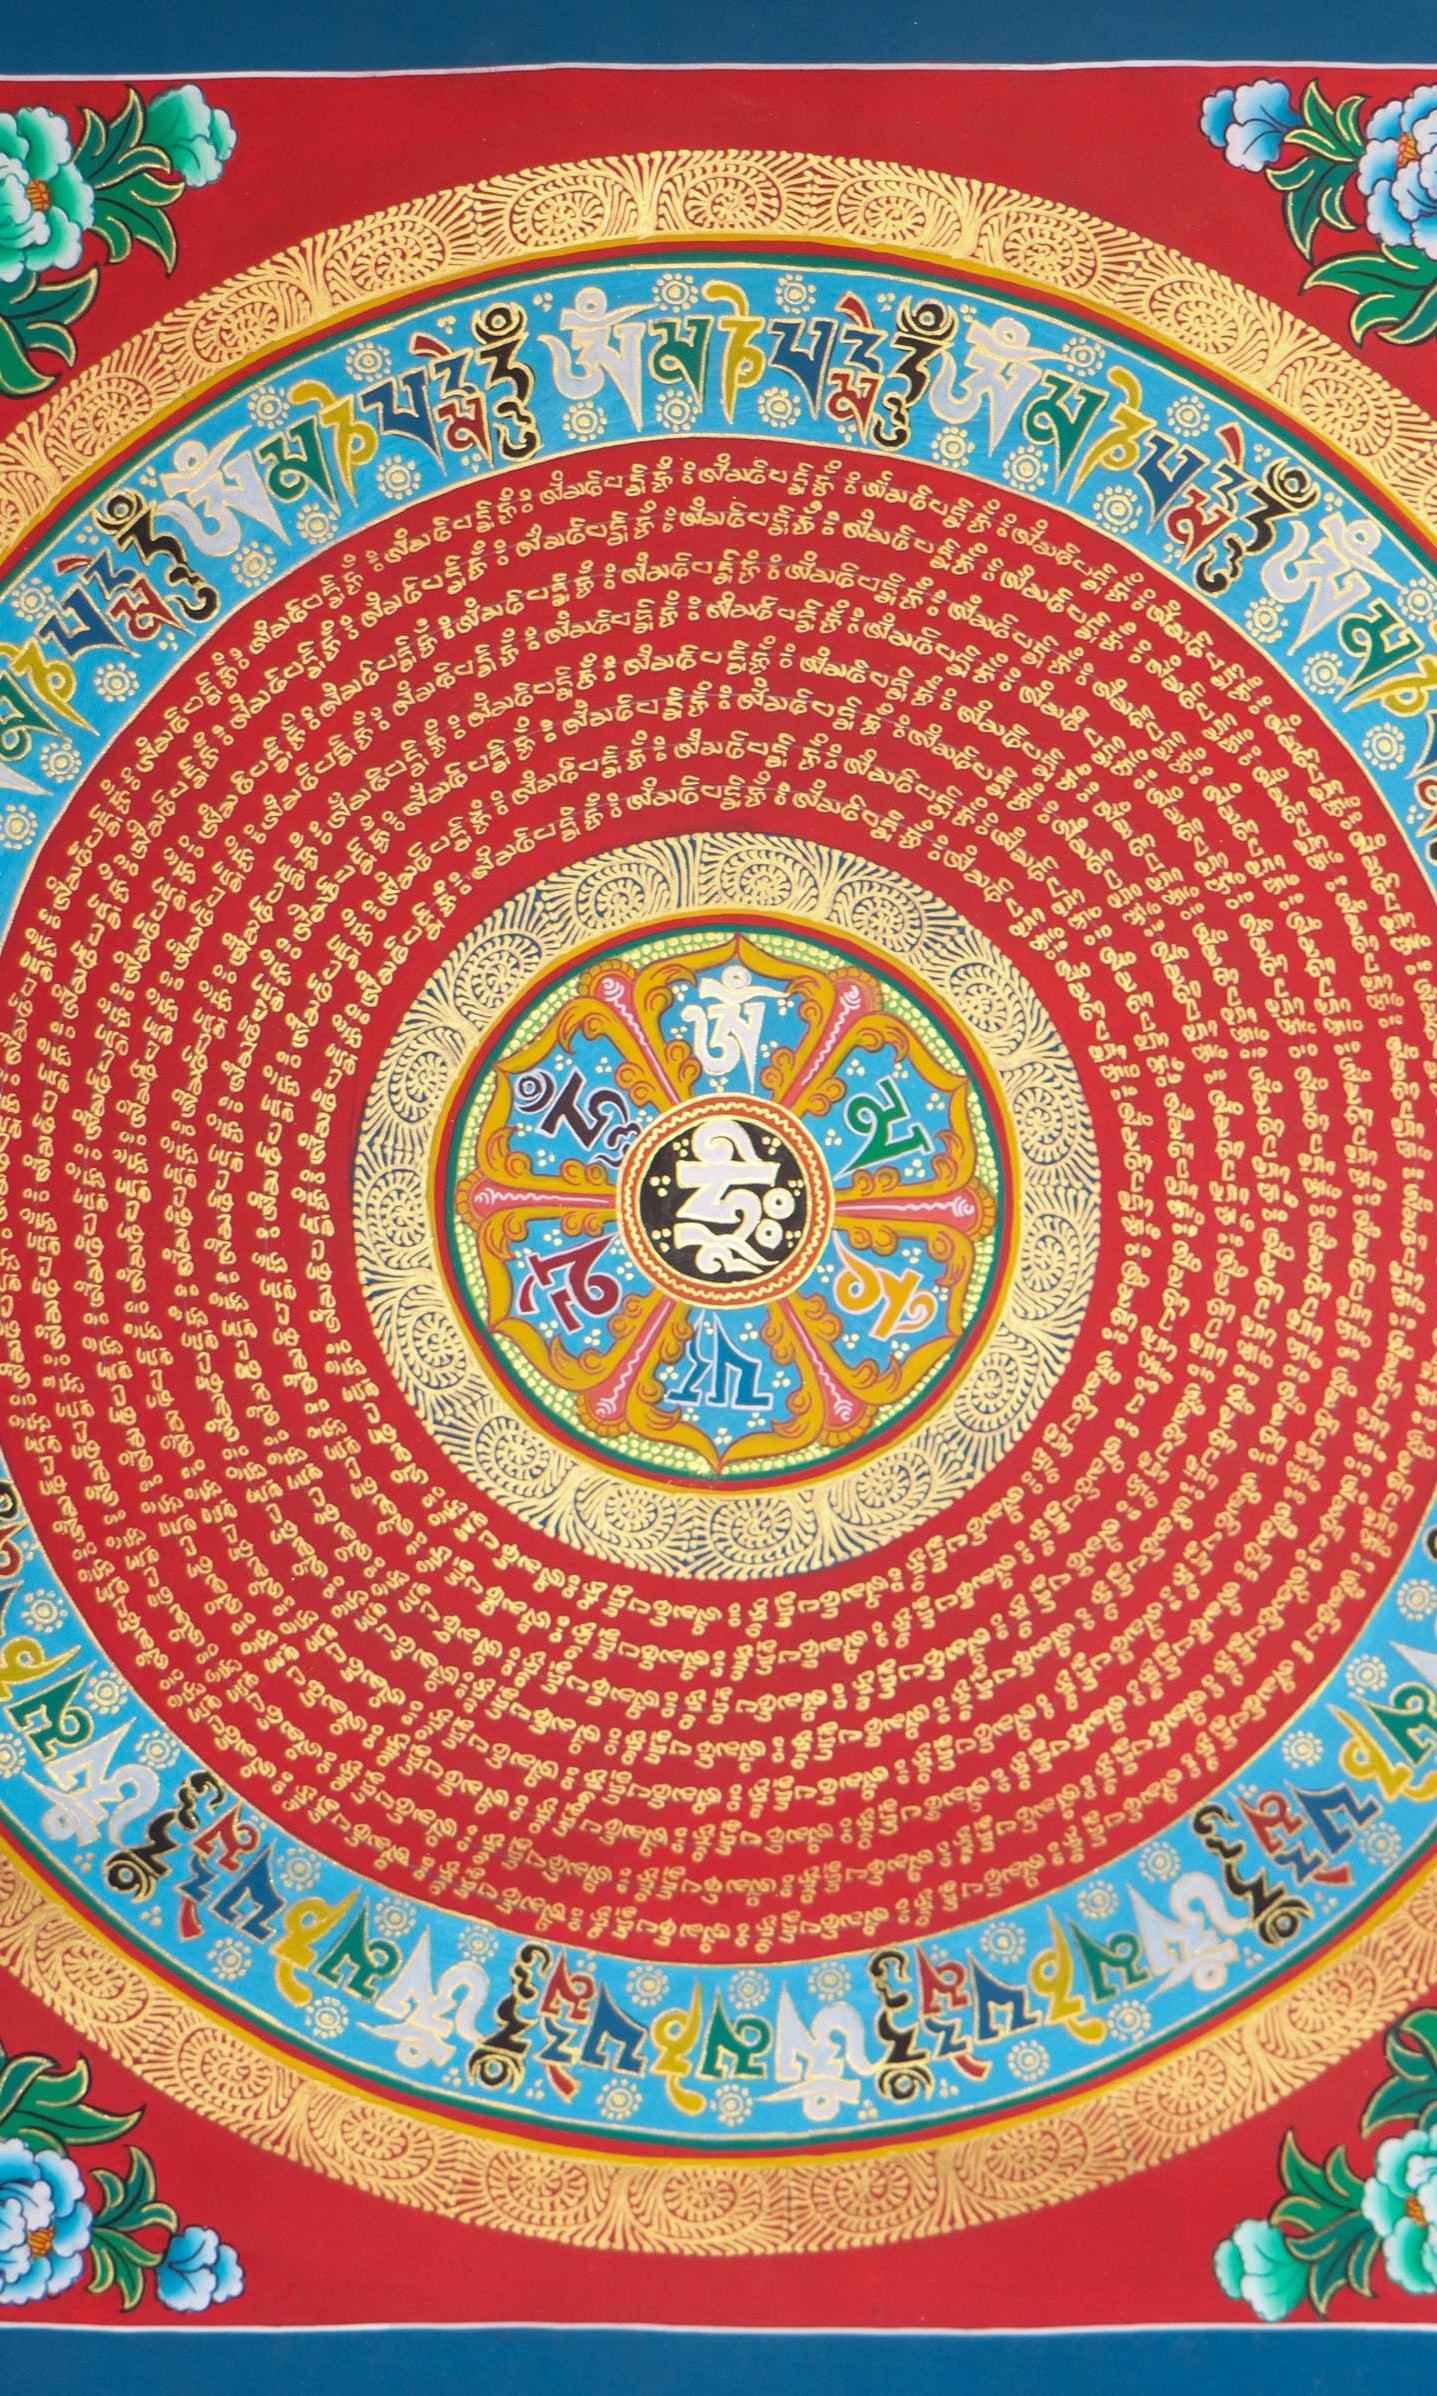 Red Mantra Mandala Thangka for meditation and spirituality .